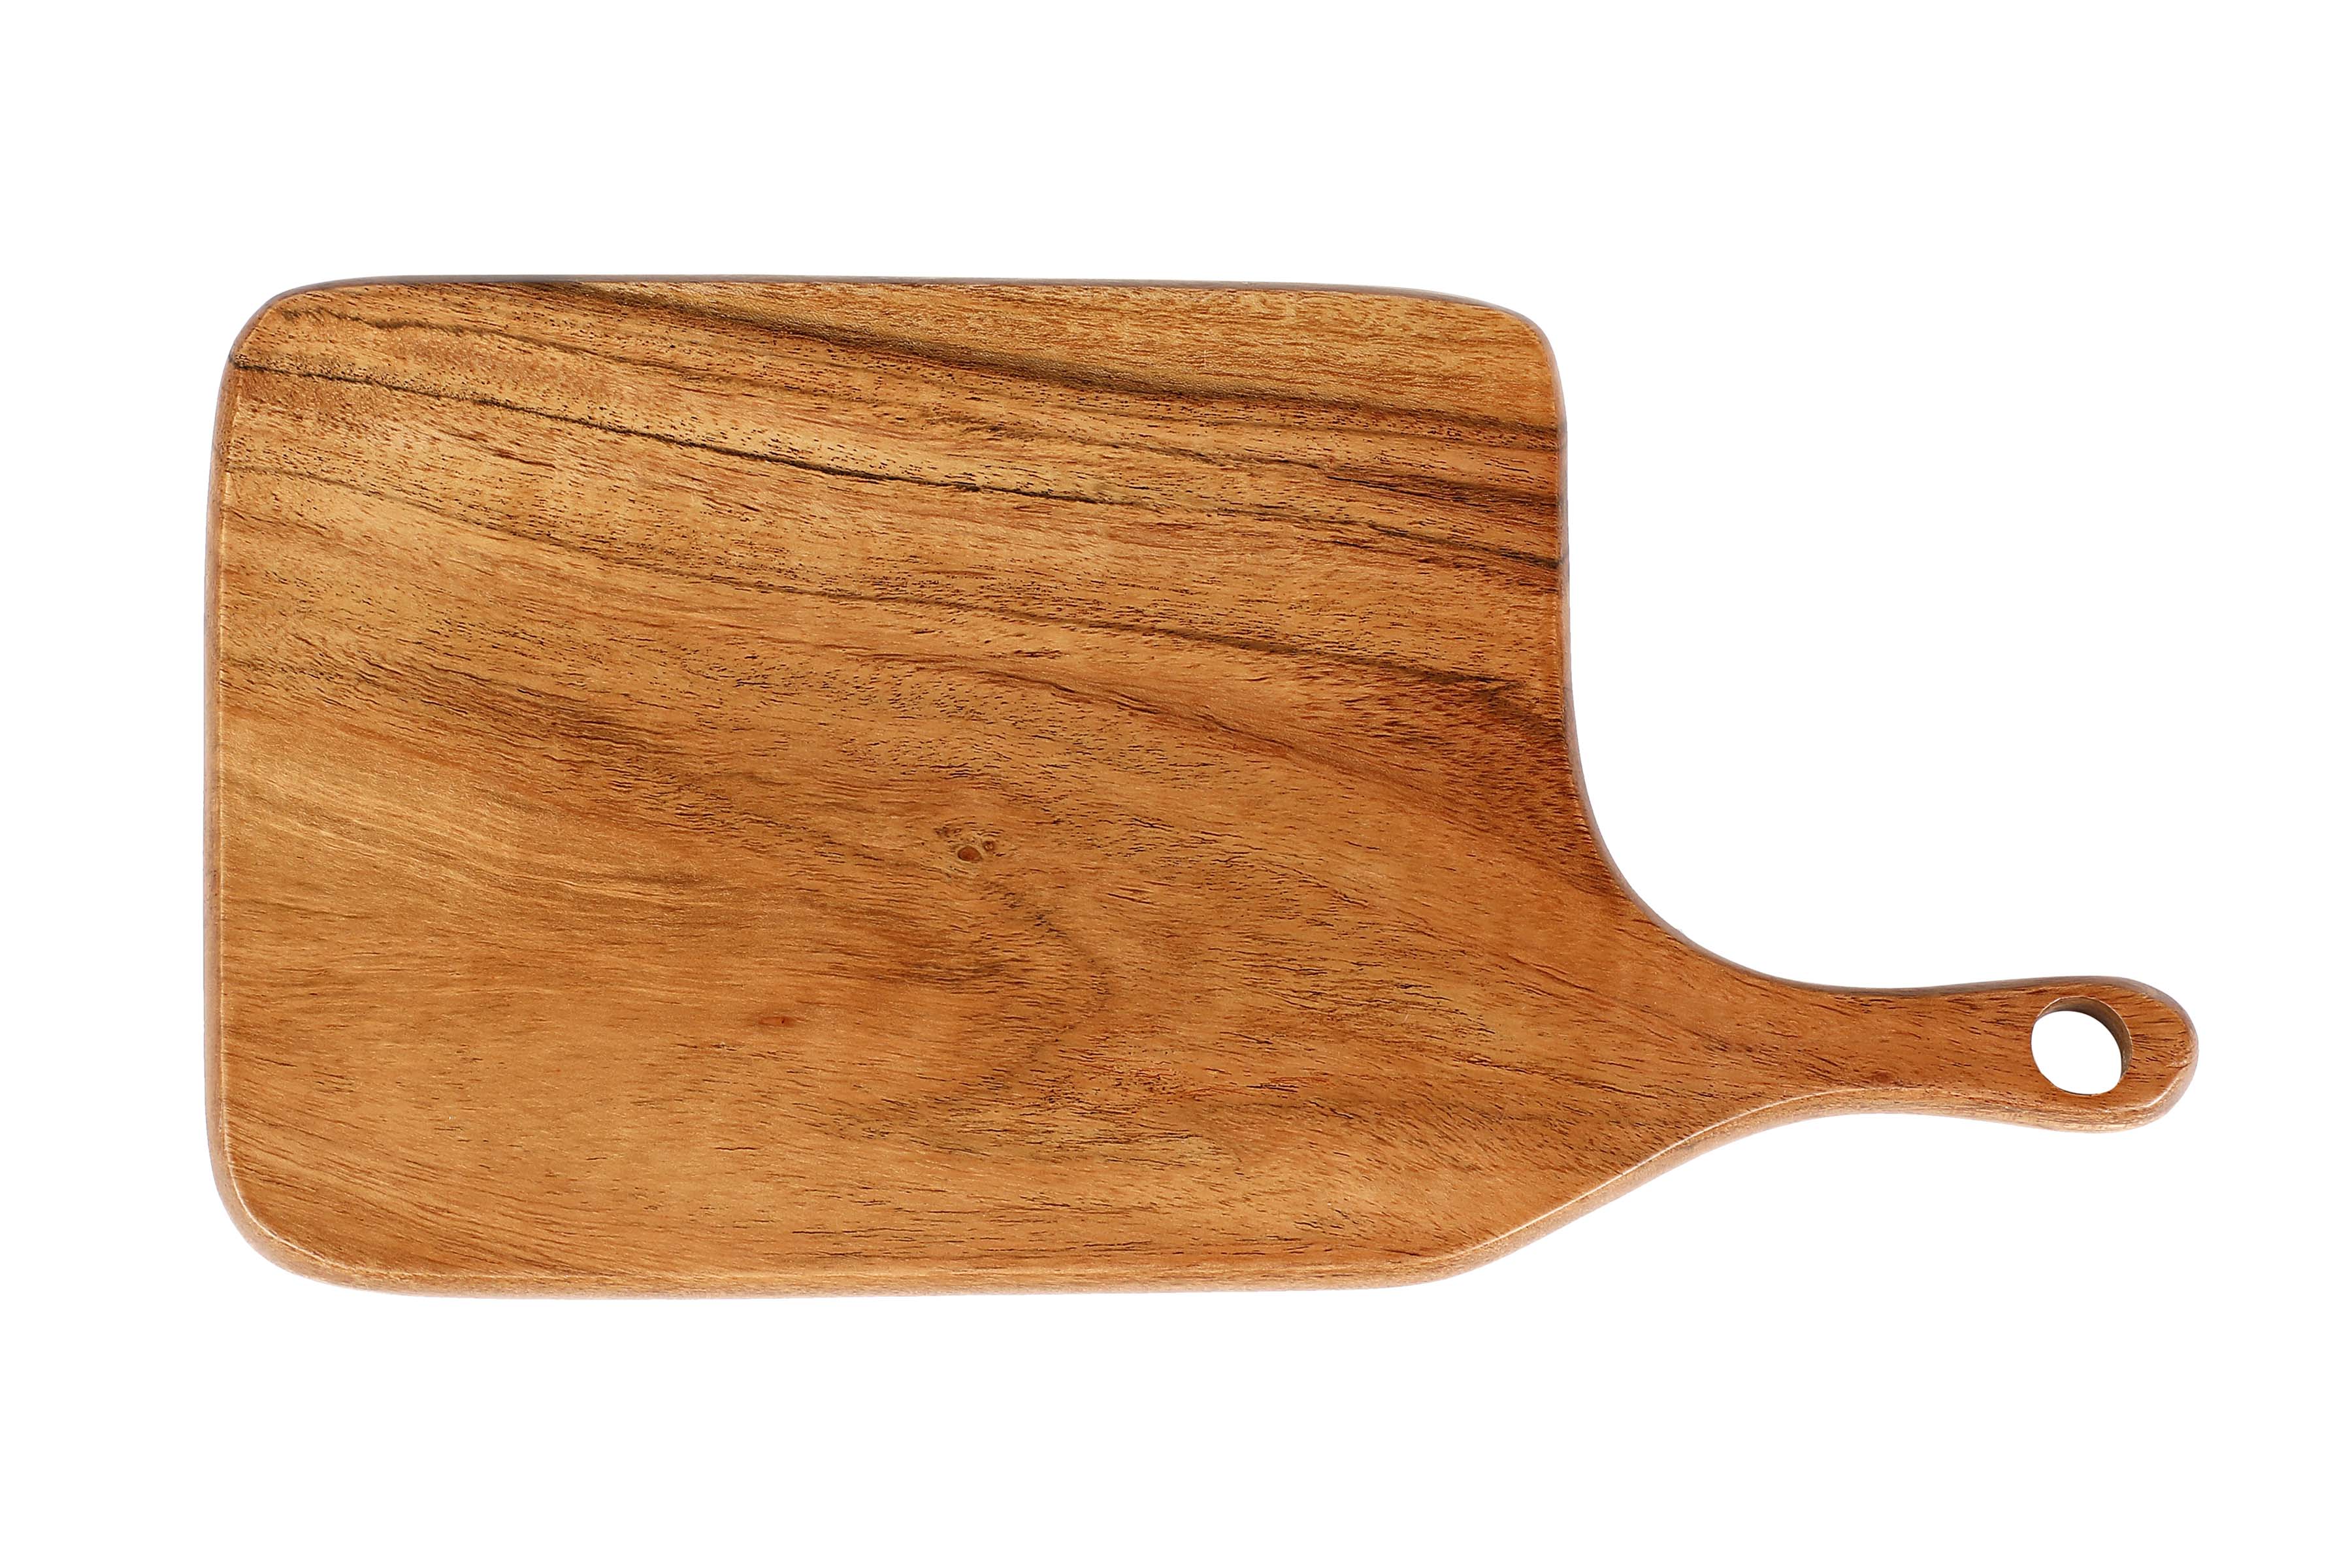 Handmade Sheesham Wood Chopping Board - 12X6.5X0.5 Inch (Set of 2)